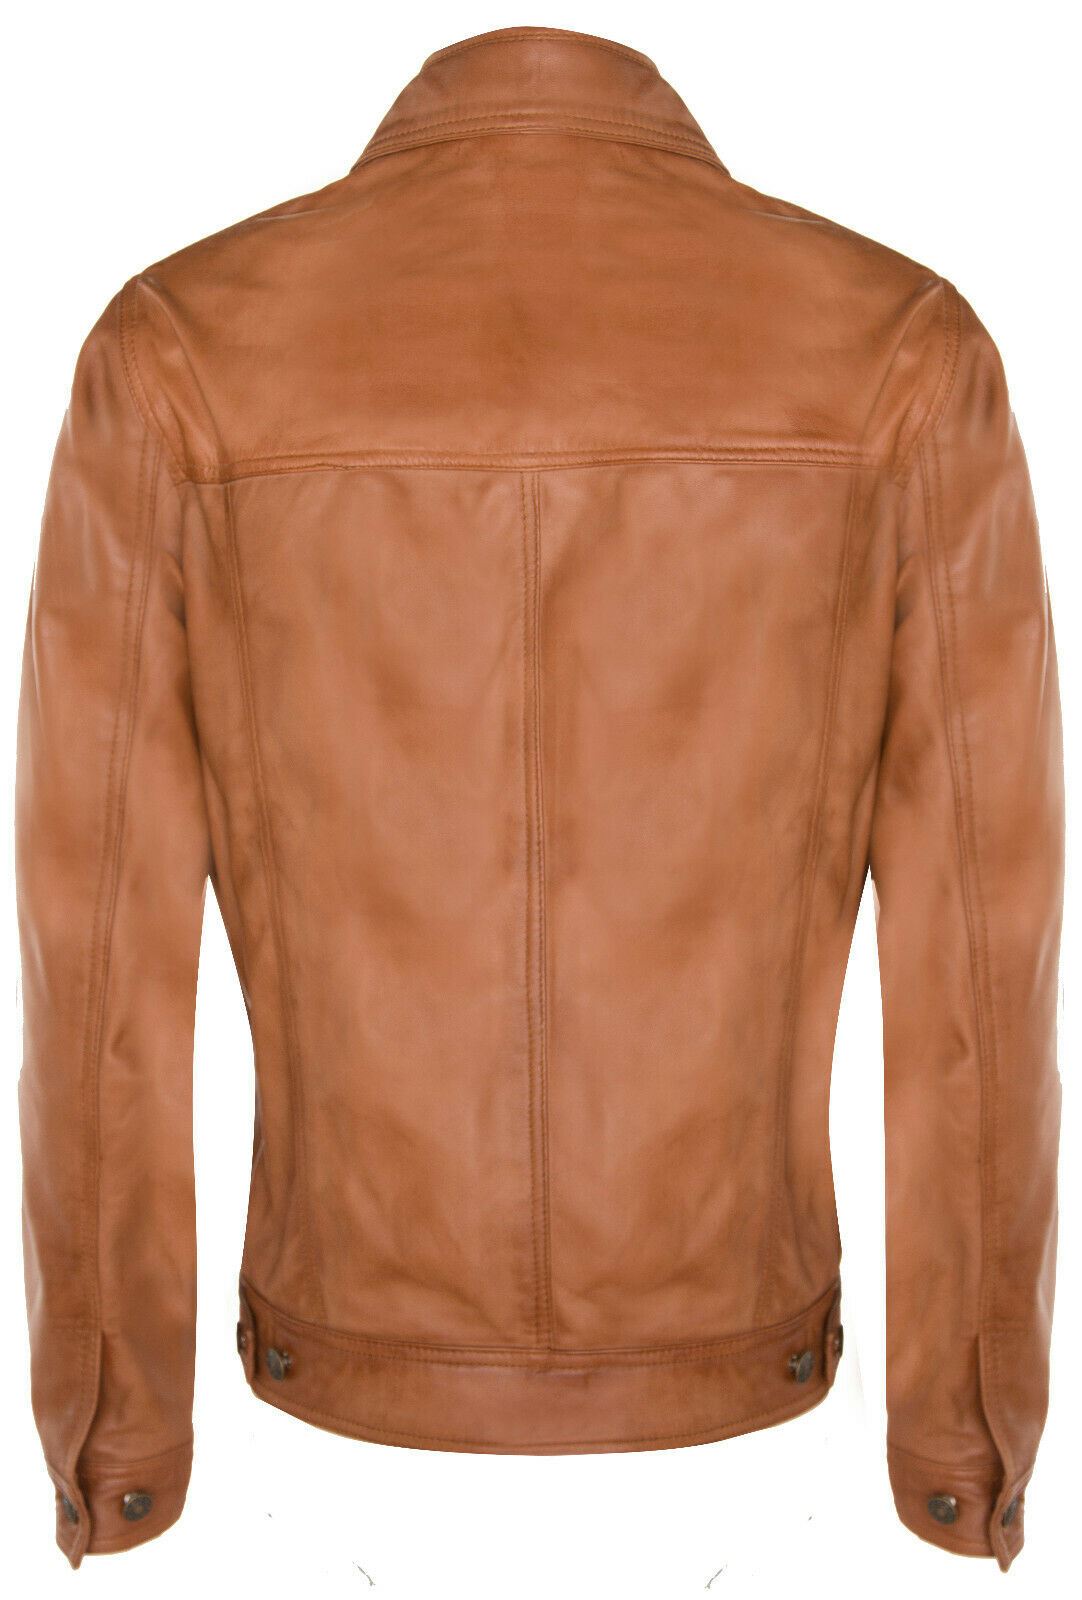 Mens Leather Trucker Jacket-Dartford - Upperclass Fashions 